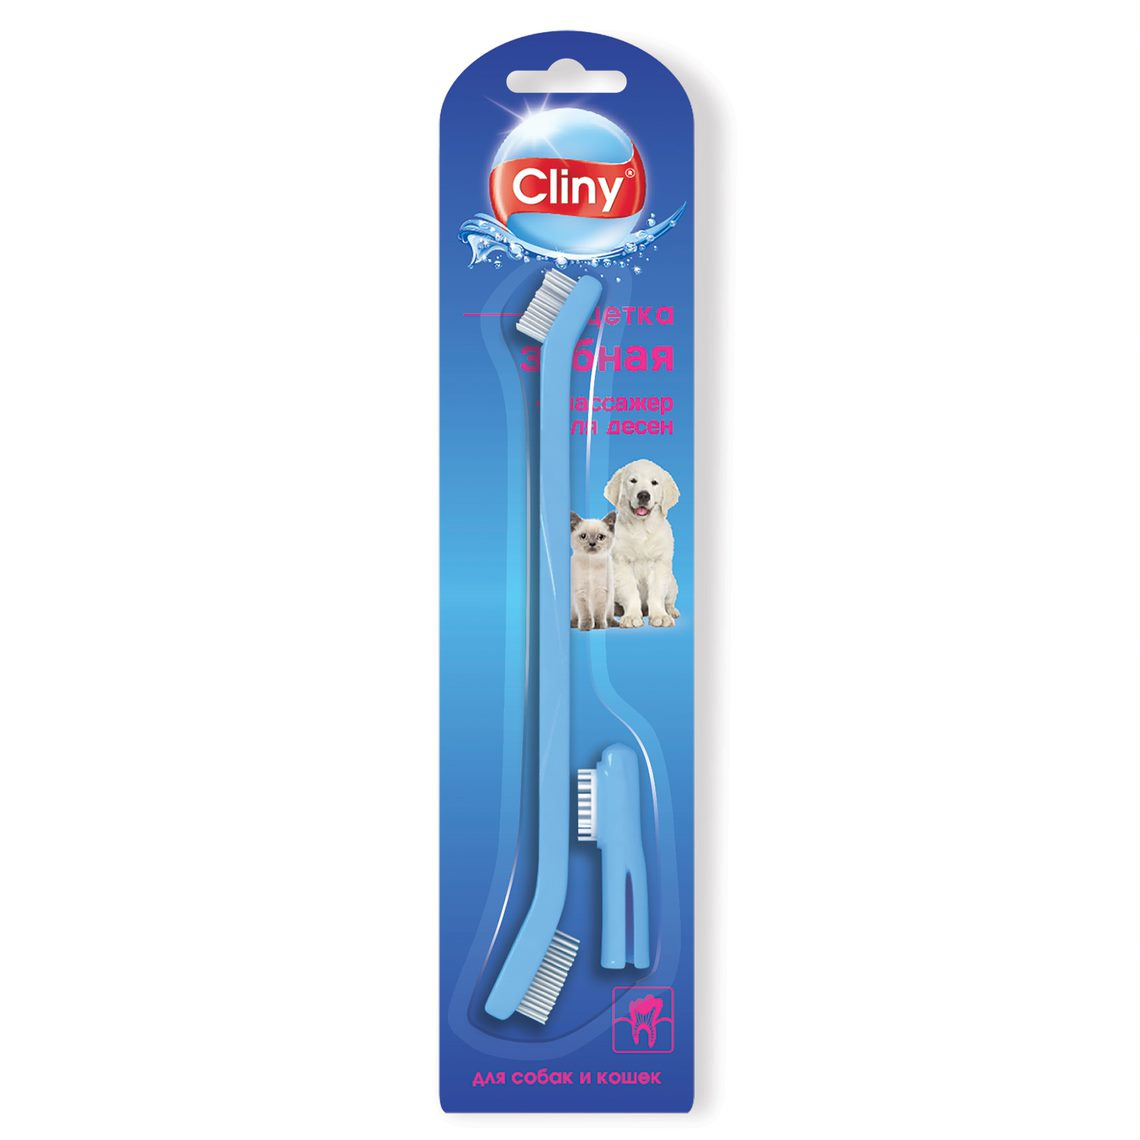 Cliny Cliny зубная щетка и массажер для десен Cliny (30 г)